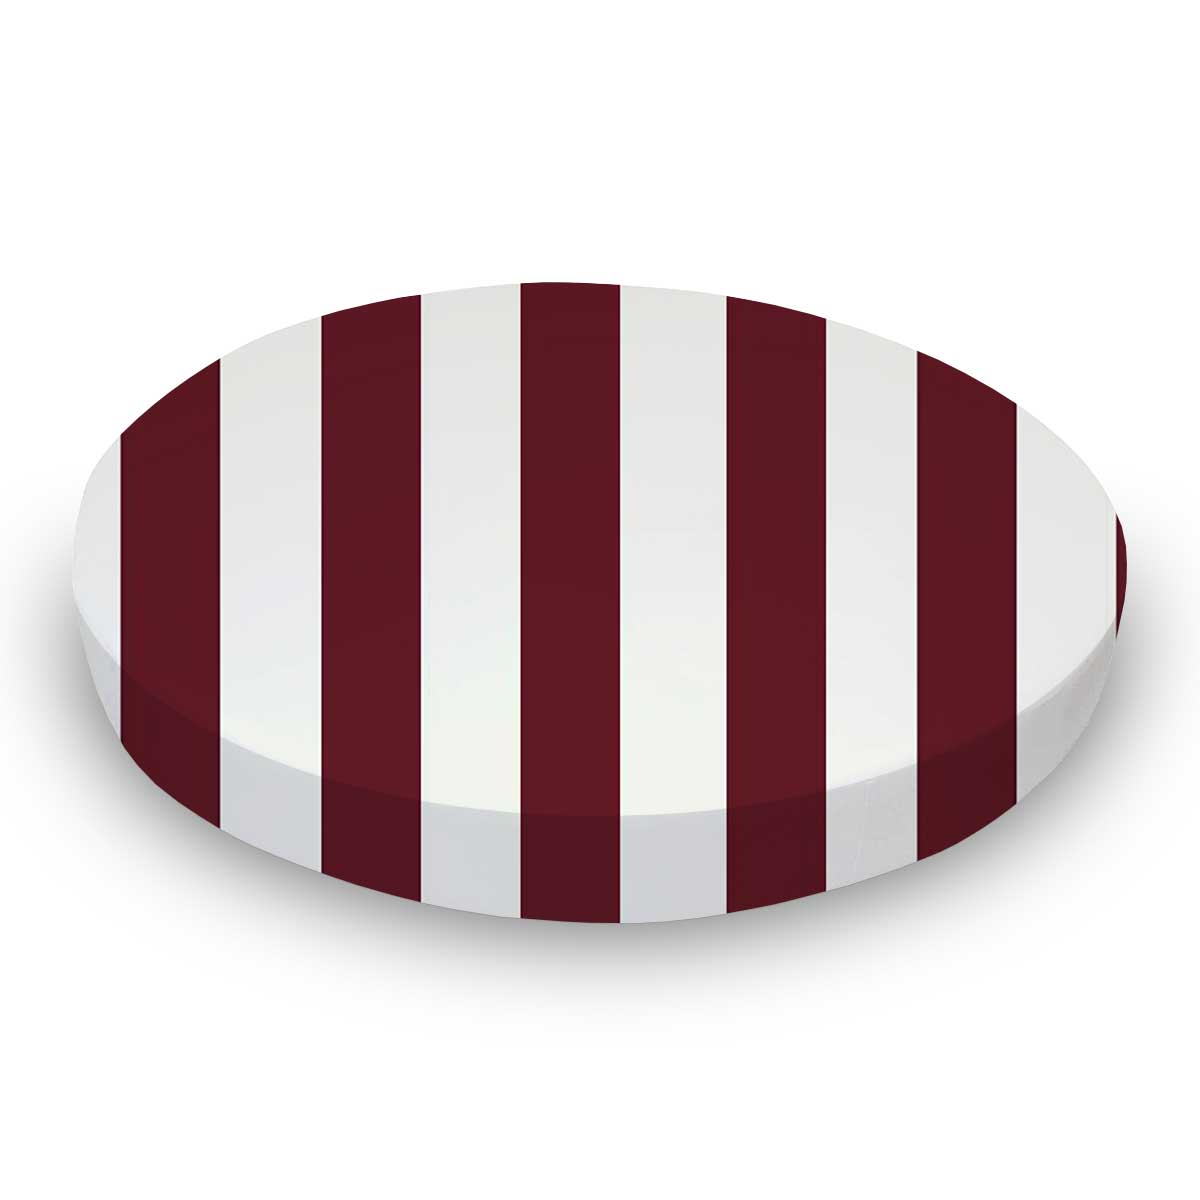 Oval Crib (Stokke Sleepi) - Burgundy Stripe - Fitted  Oval